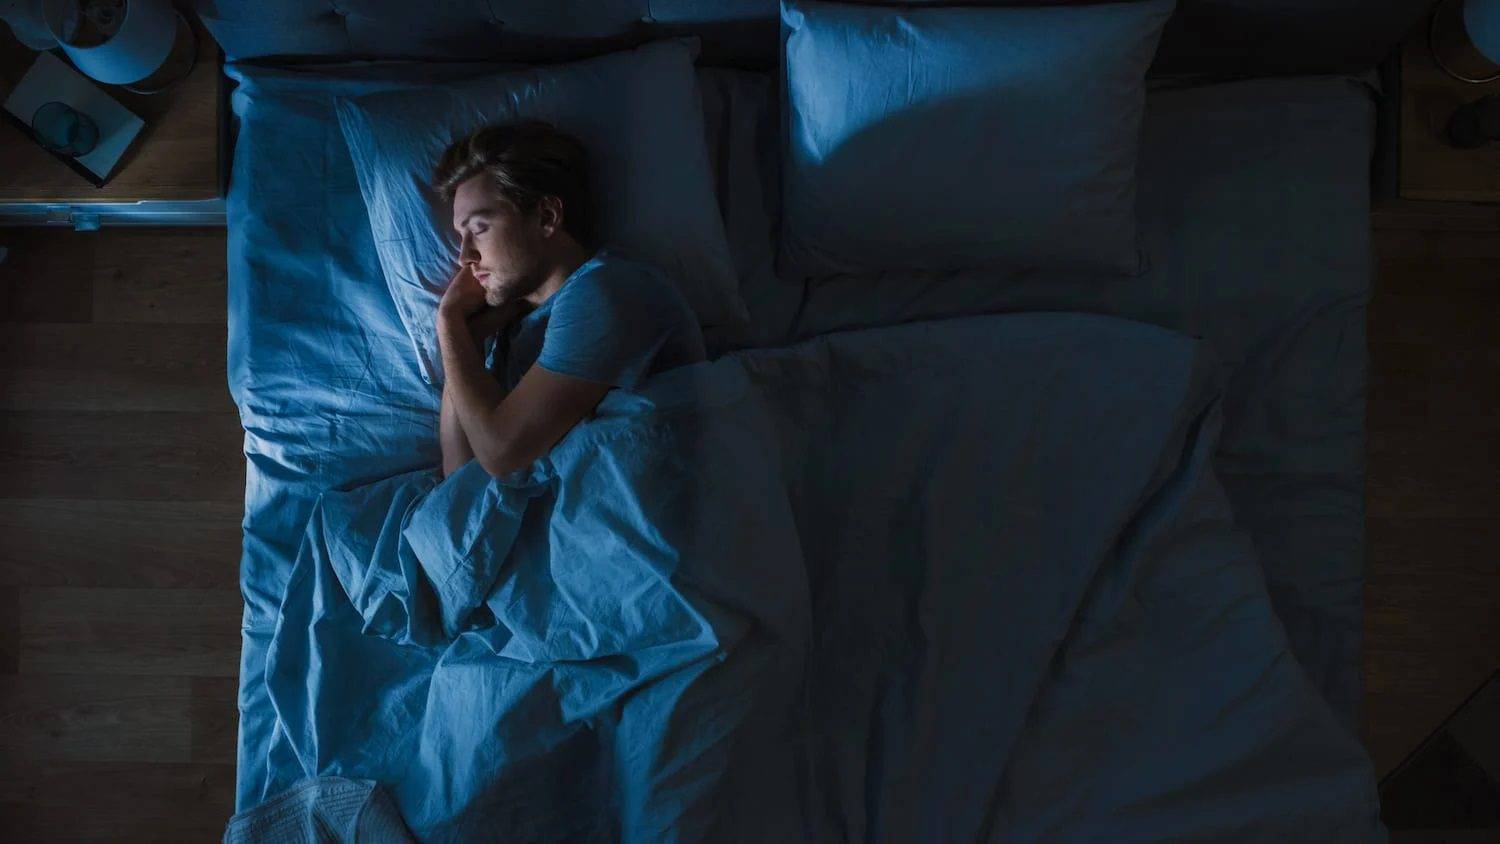 Good sleep enhances decision making, strengthens emotional memories